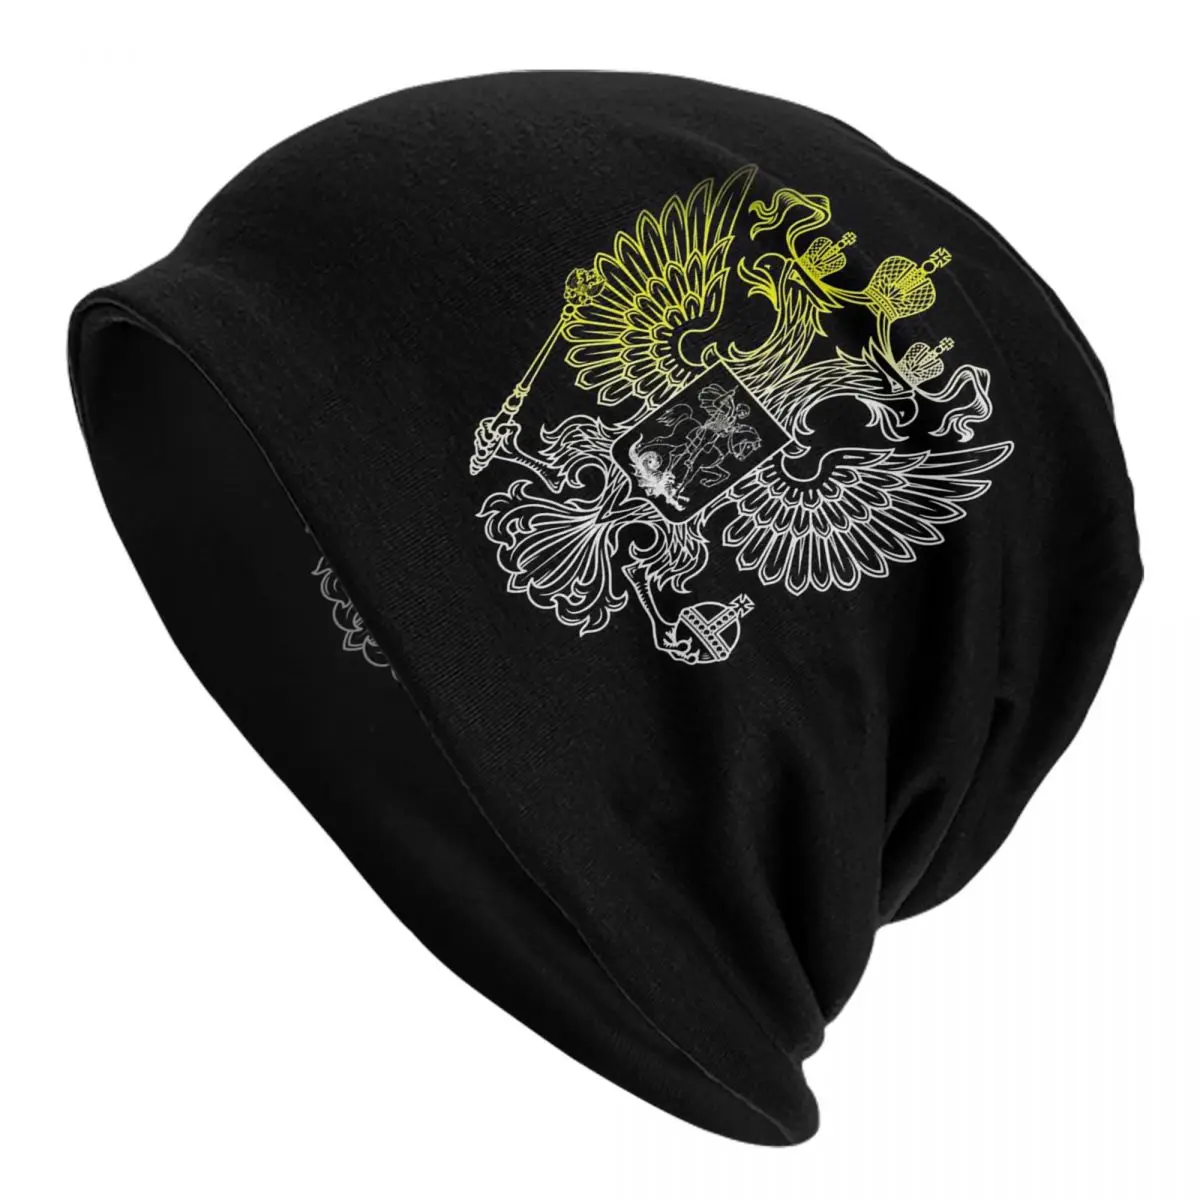 

Russian Emblem Bonnet Hat Knitted Hat Fashion Outdoor Skullies Beanies Hats Men's Women's Warm Thermal Elastic Cap